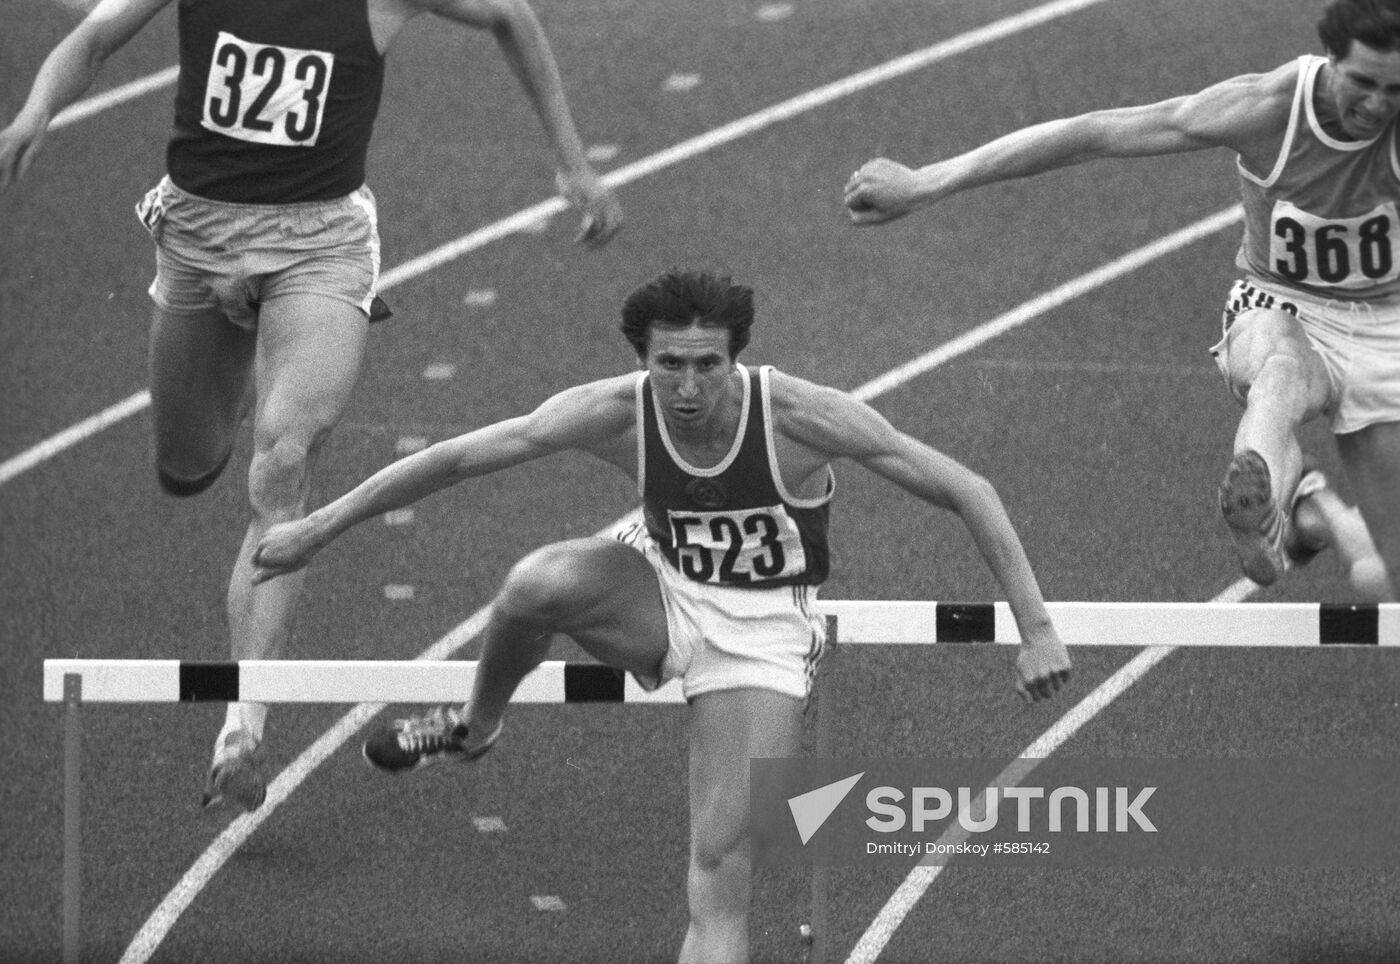 Vasily Arkhipenko during a race